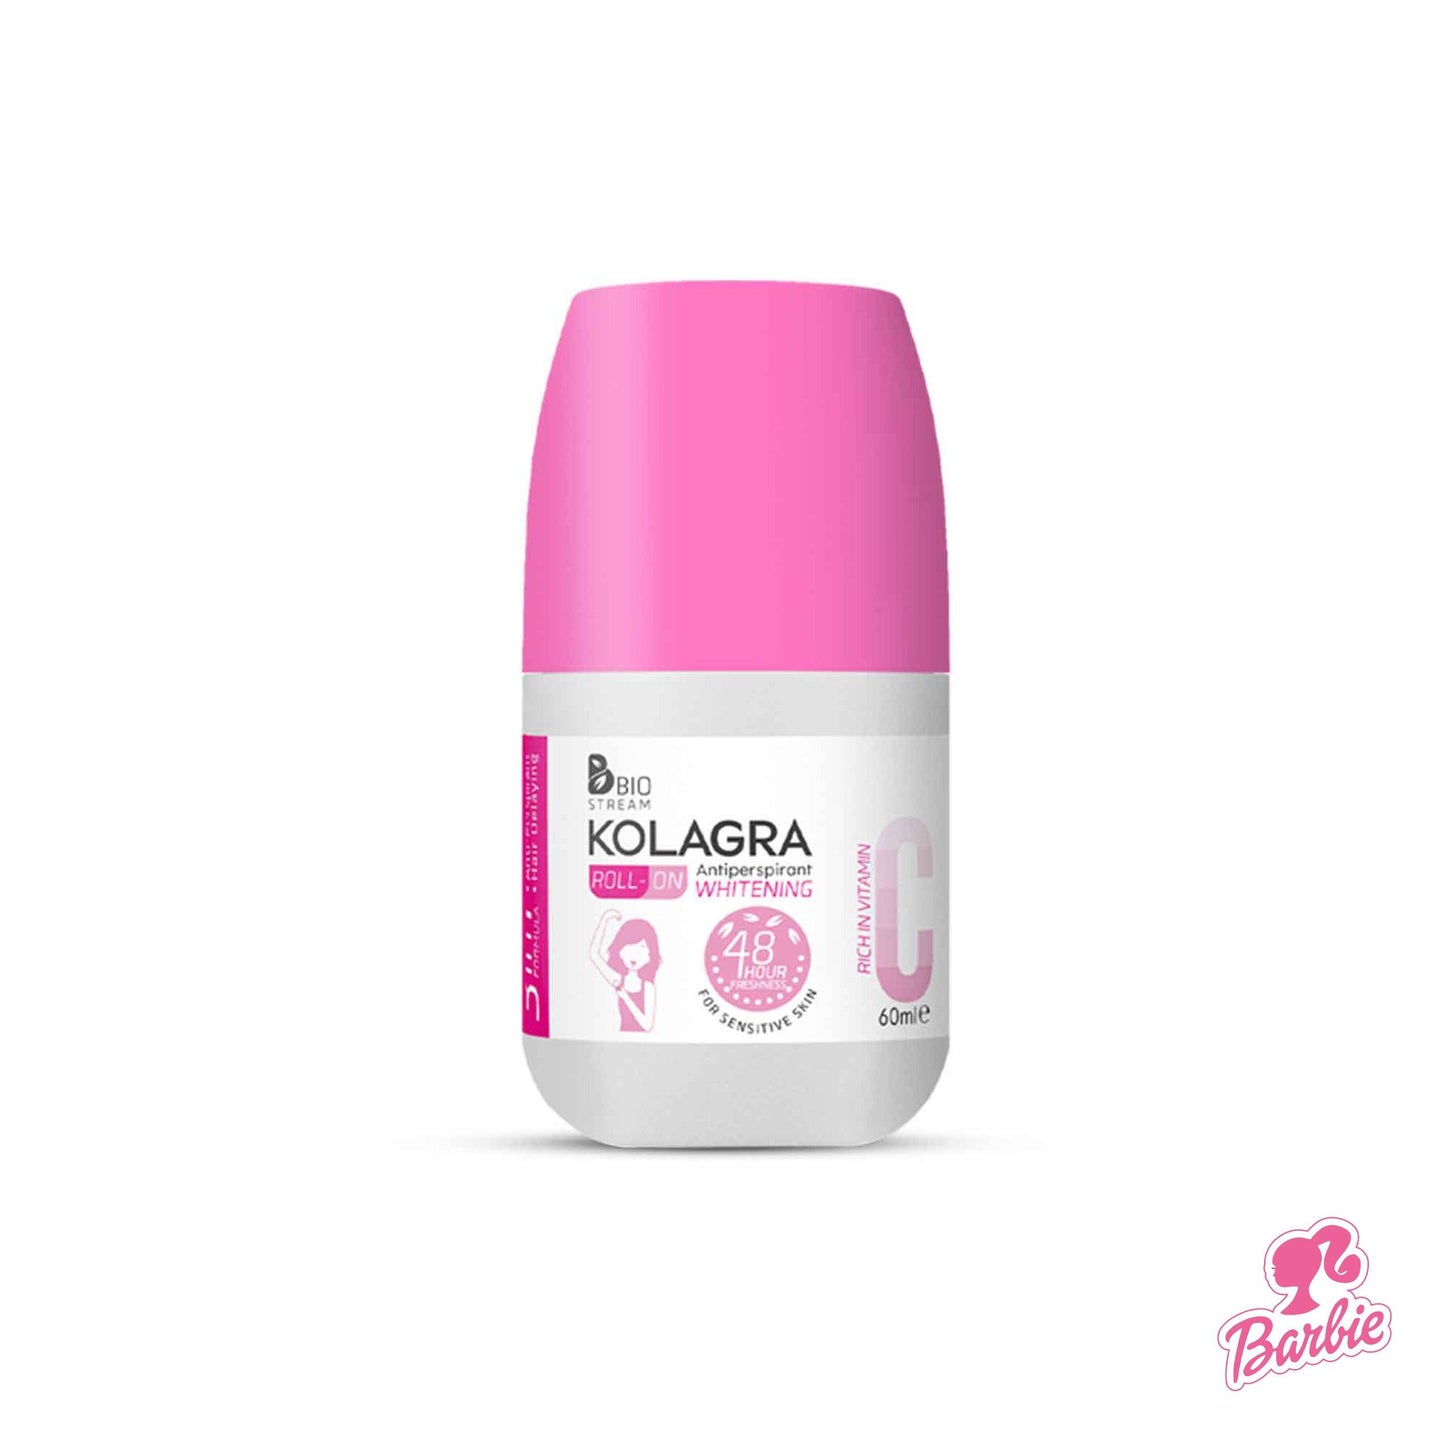 KOLAGRA Whitening Roll on Deodorant 3 IN 1 Vitamin C 60 ML 1 + 1 Offer - Beauty Bounty